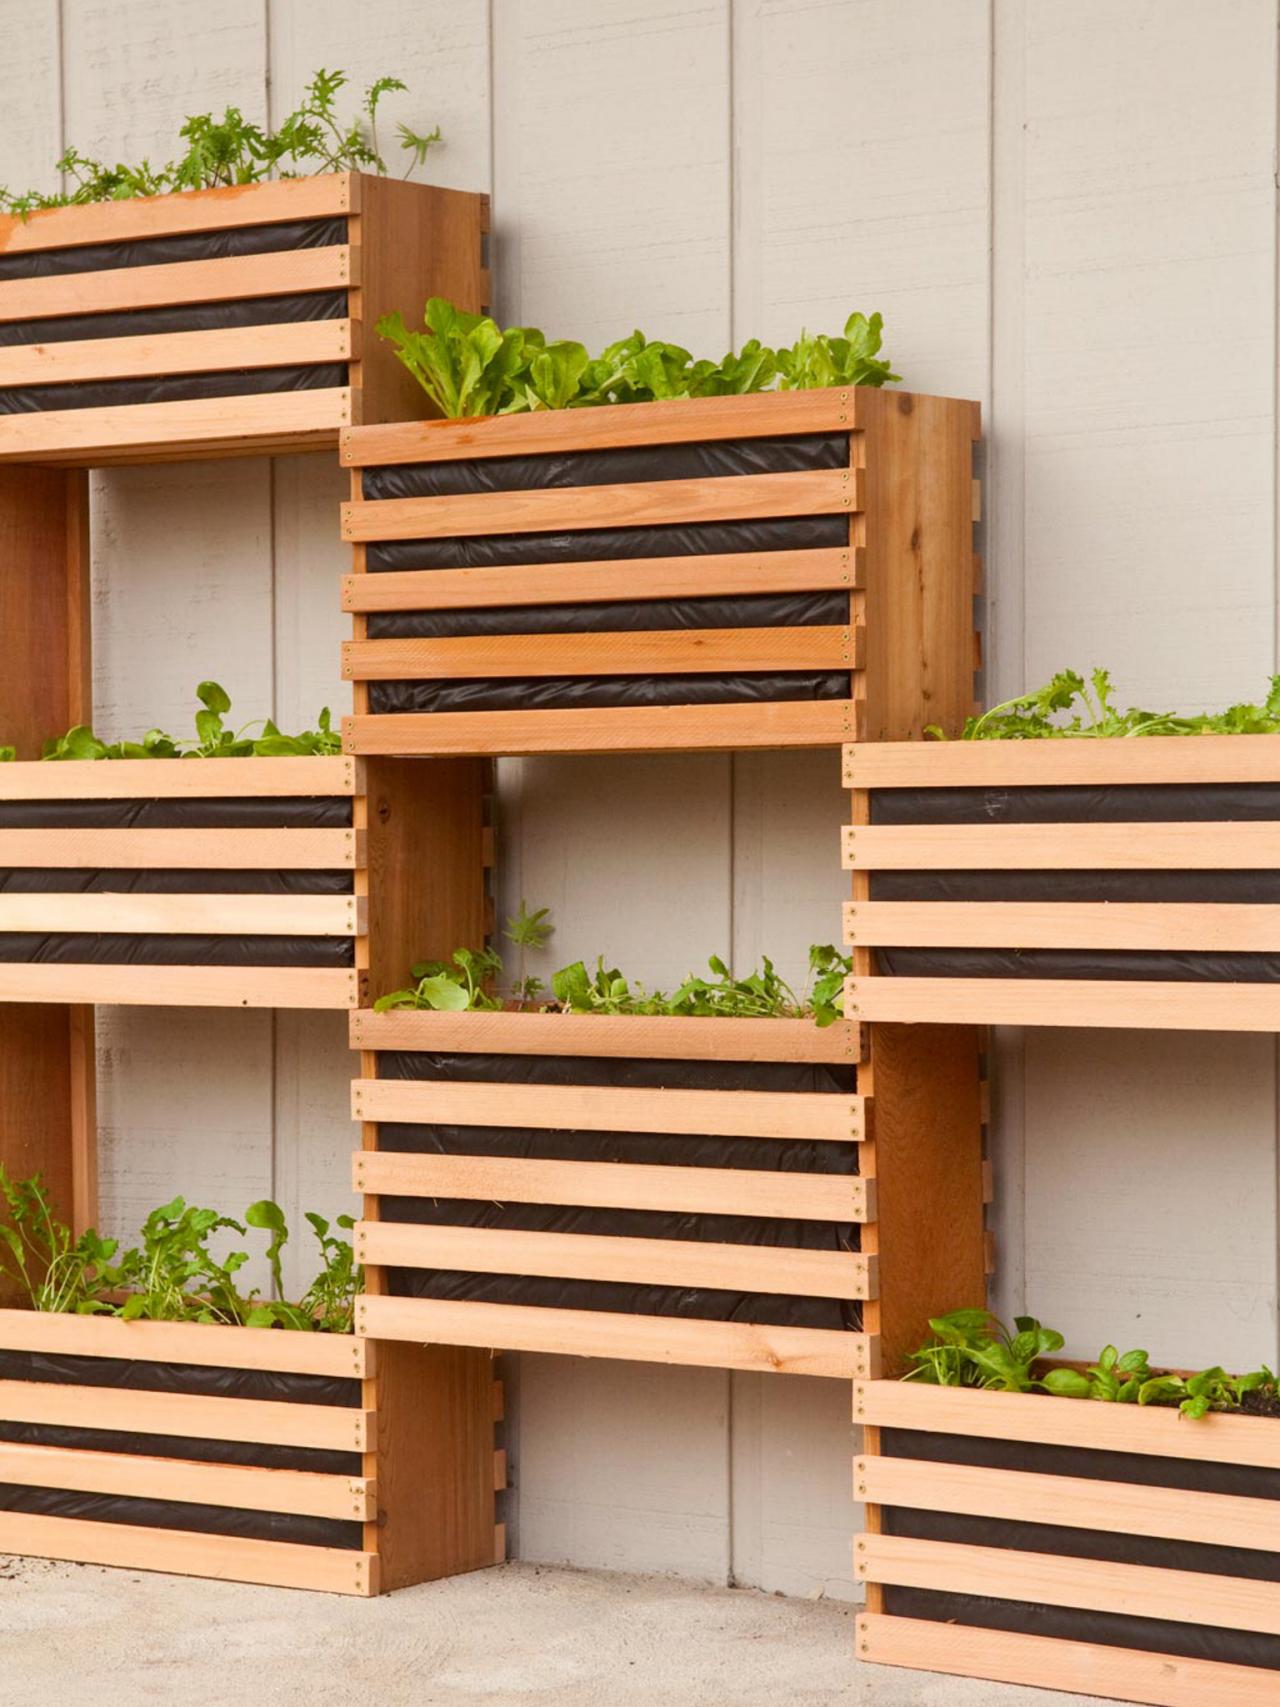 10 Vertical Planter Ideas For Summer HGTVs Decorating Design